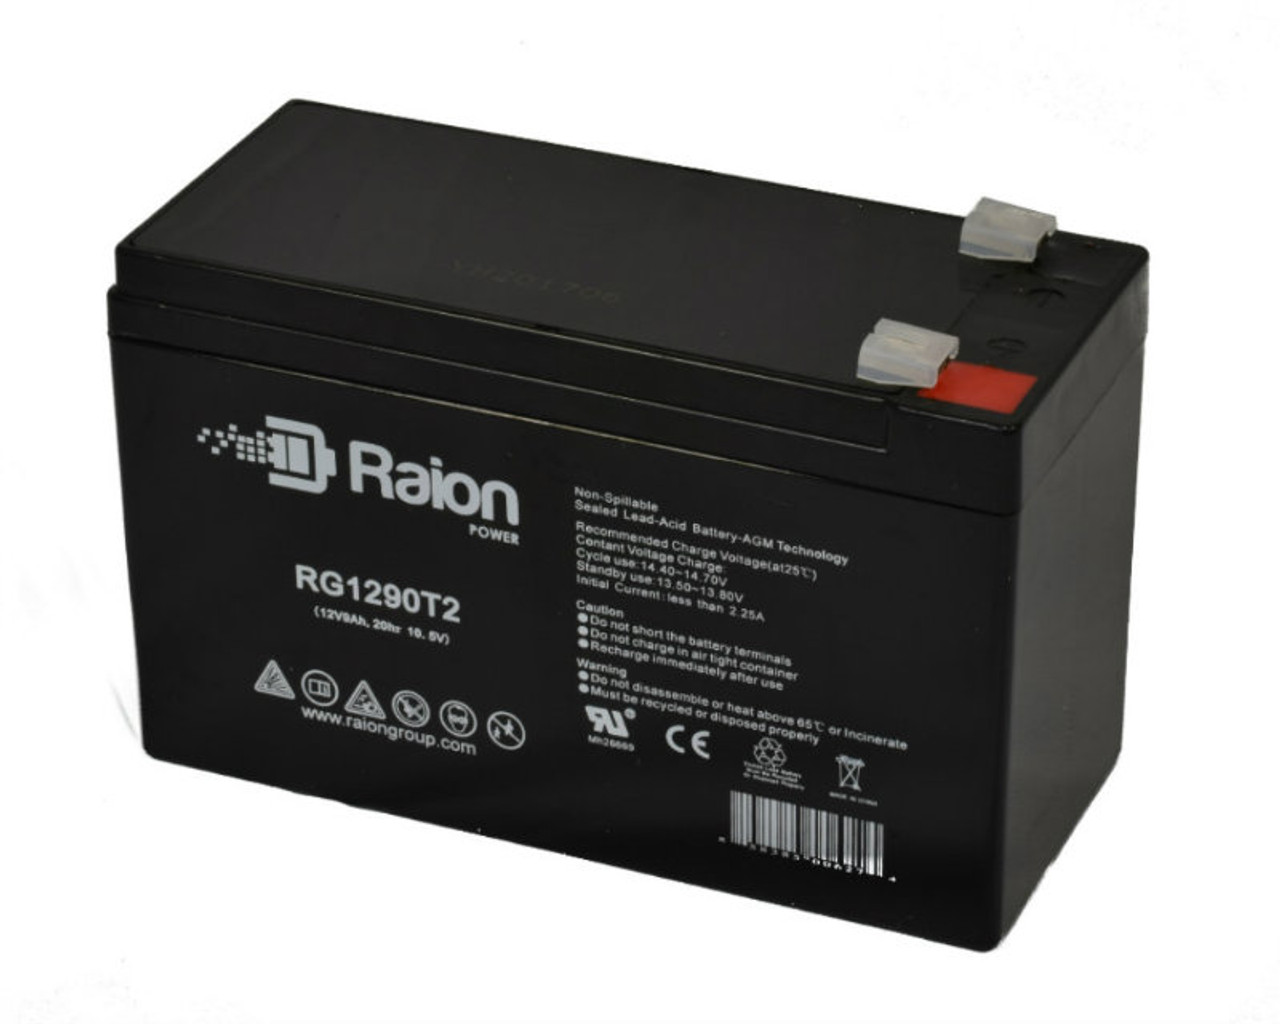 Raion Power RG1290T2 12V 9Ah AGM Battery for Europower EV 9-12